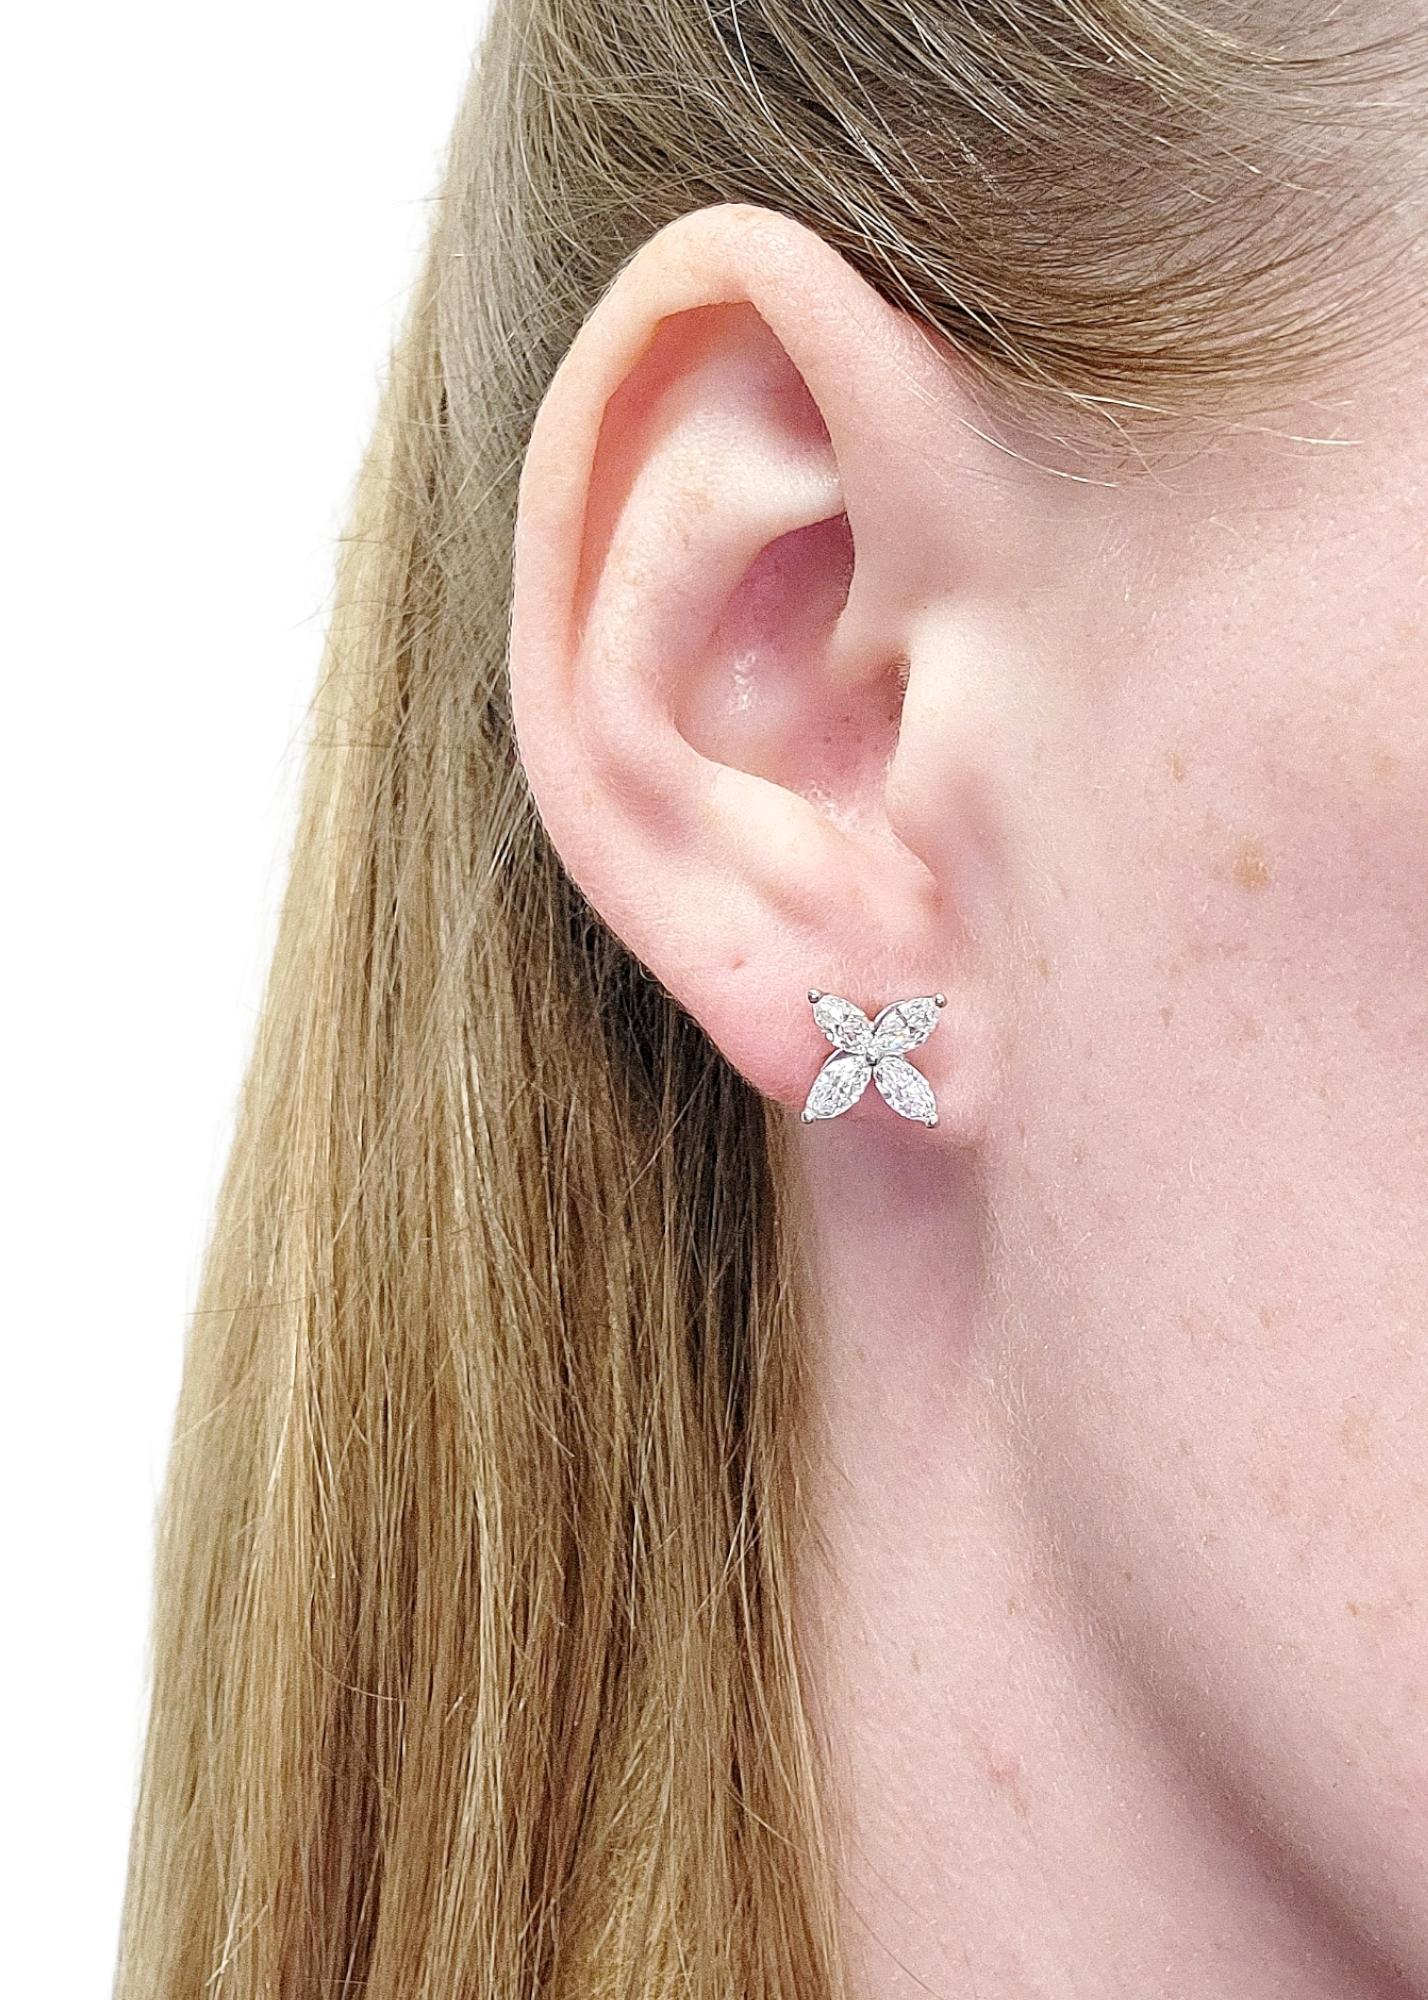 Tiffany & Co. Victoria Medium .92 Carats Diamond Stud Earrings in Platinum For Sale 5